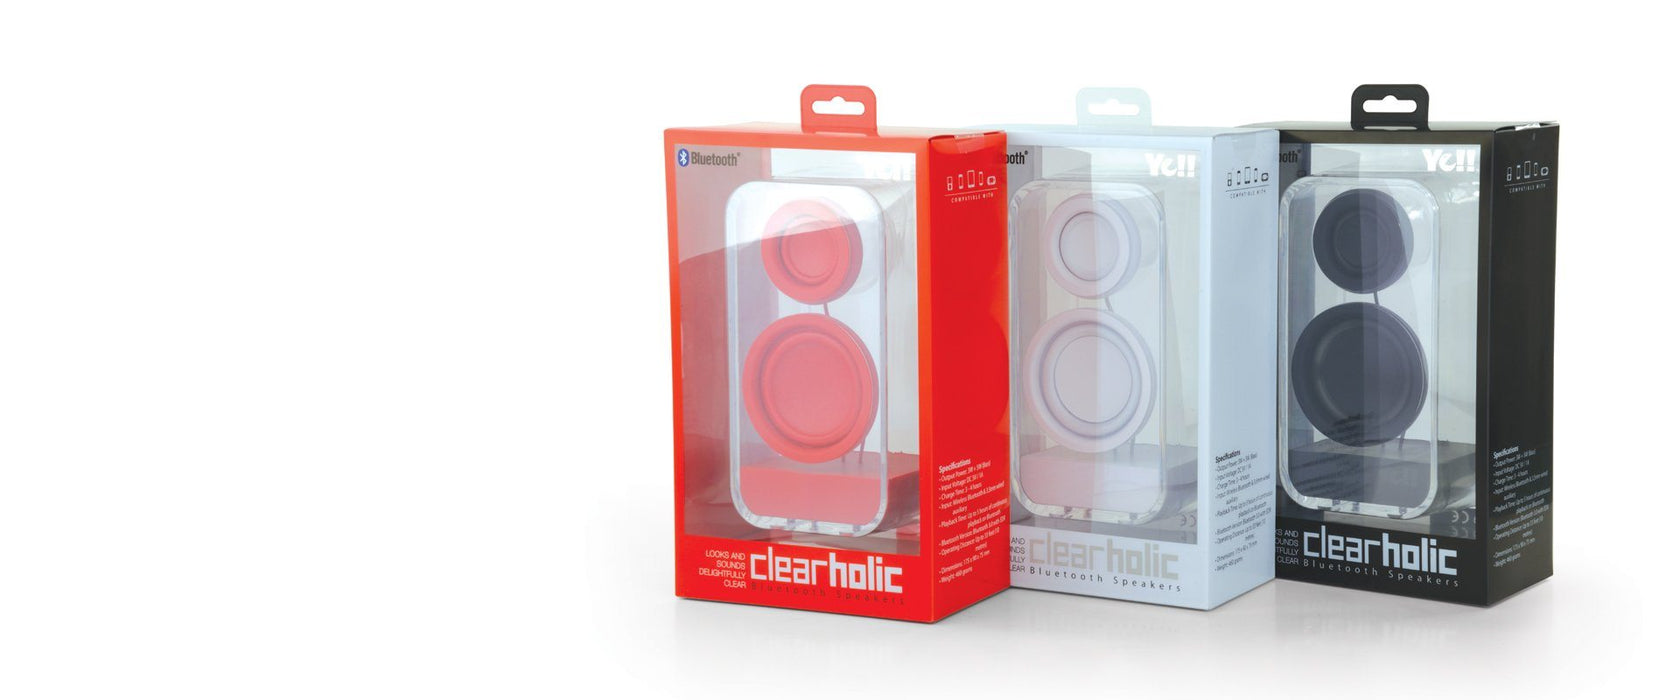 Ye!! Clearholic Transparent Speaker - Black 12 month warranty applies Tech Outlet 